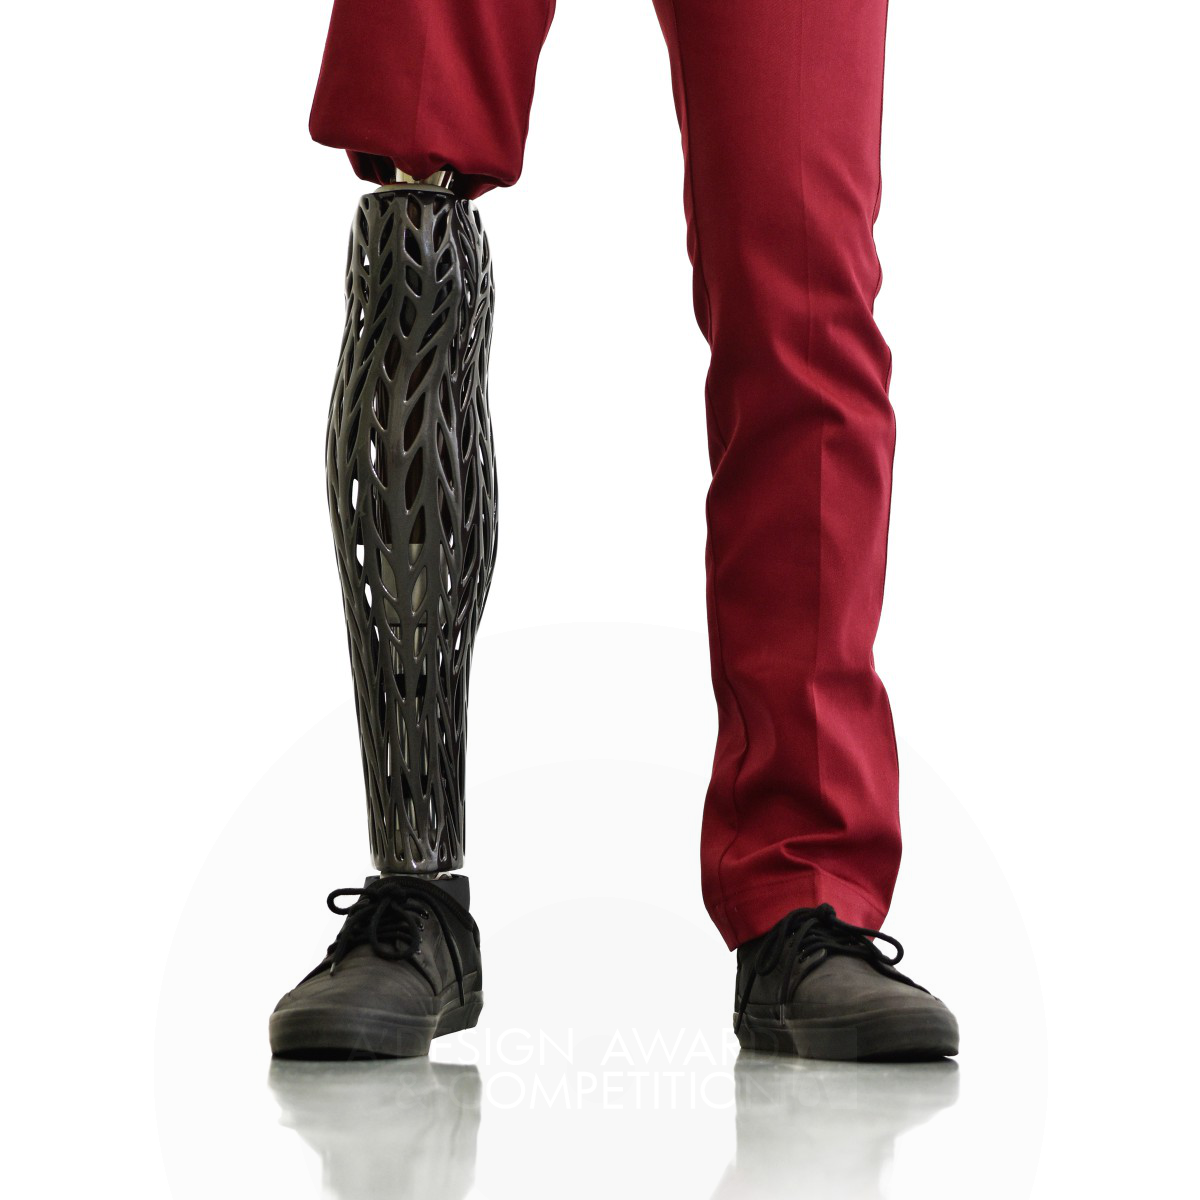 Art4Leg <b>3D printed prosthesis cover